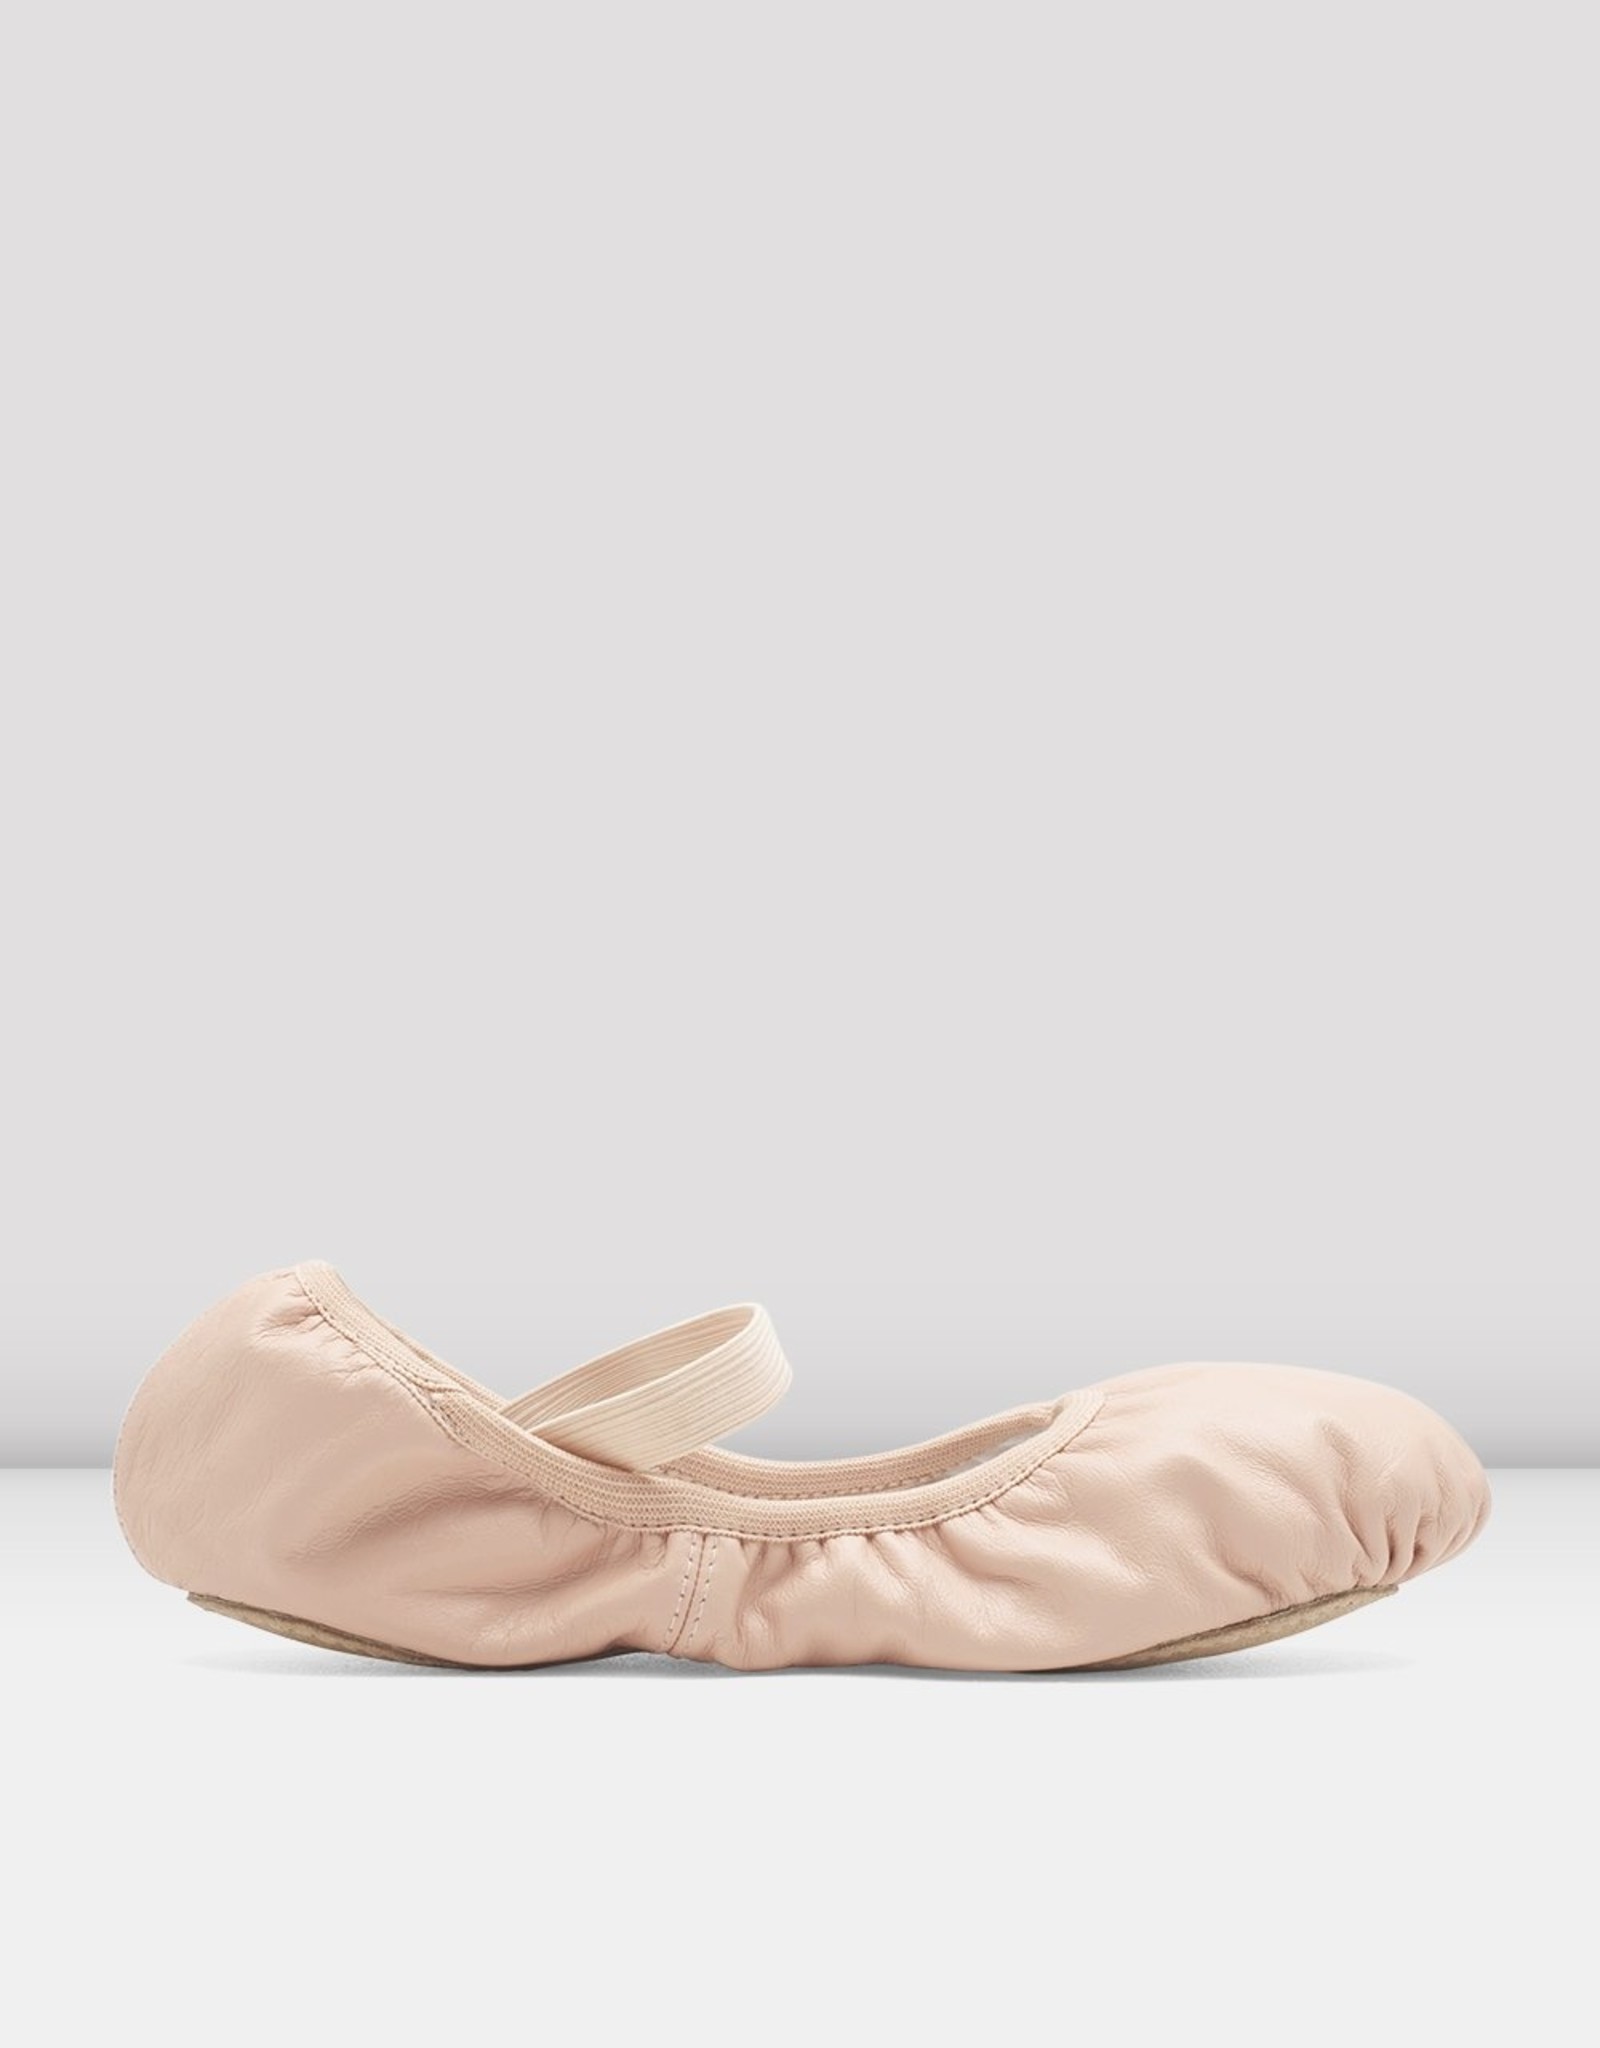 Bloch Children's S0249G Giselle Ballet Shoes - Beam & Barre